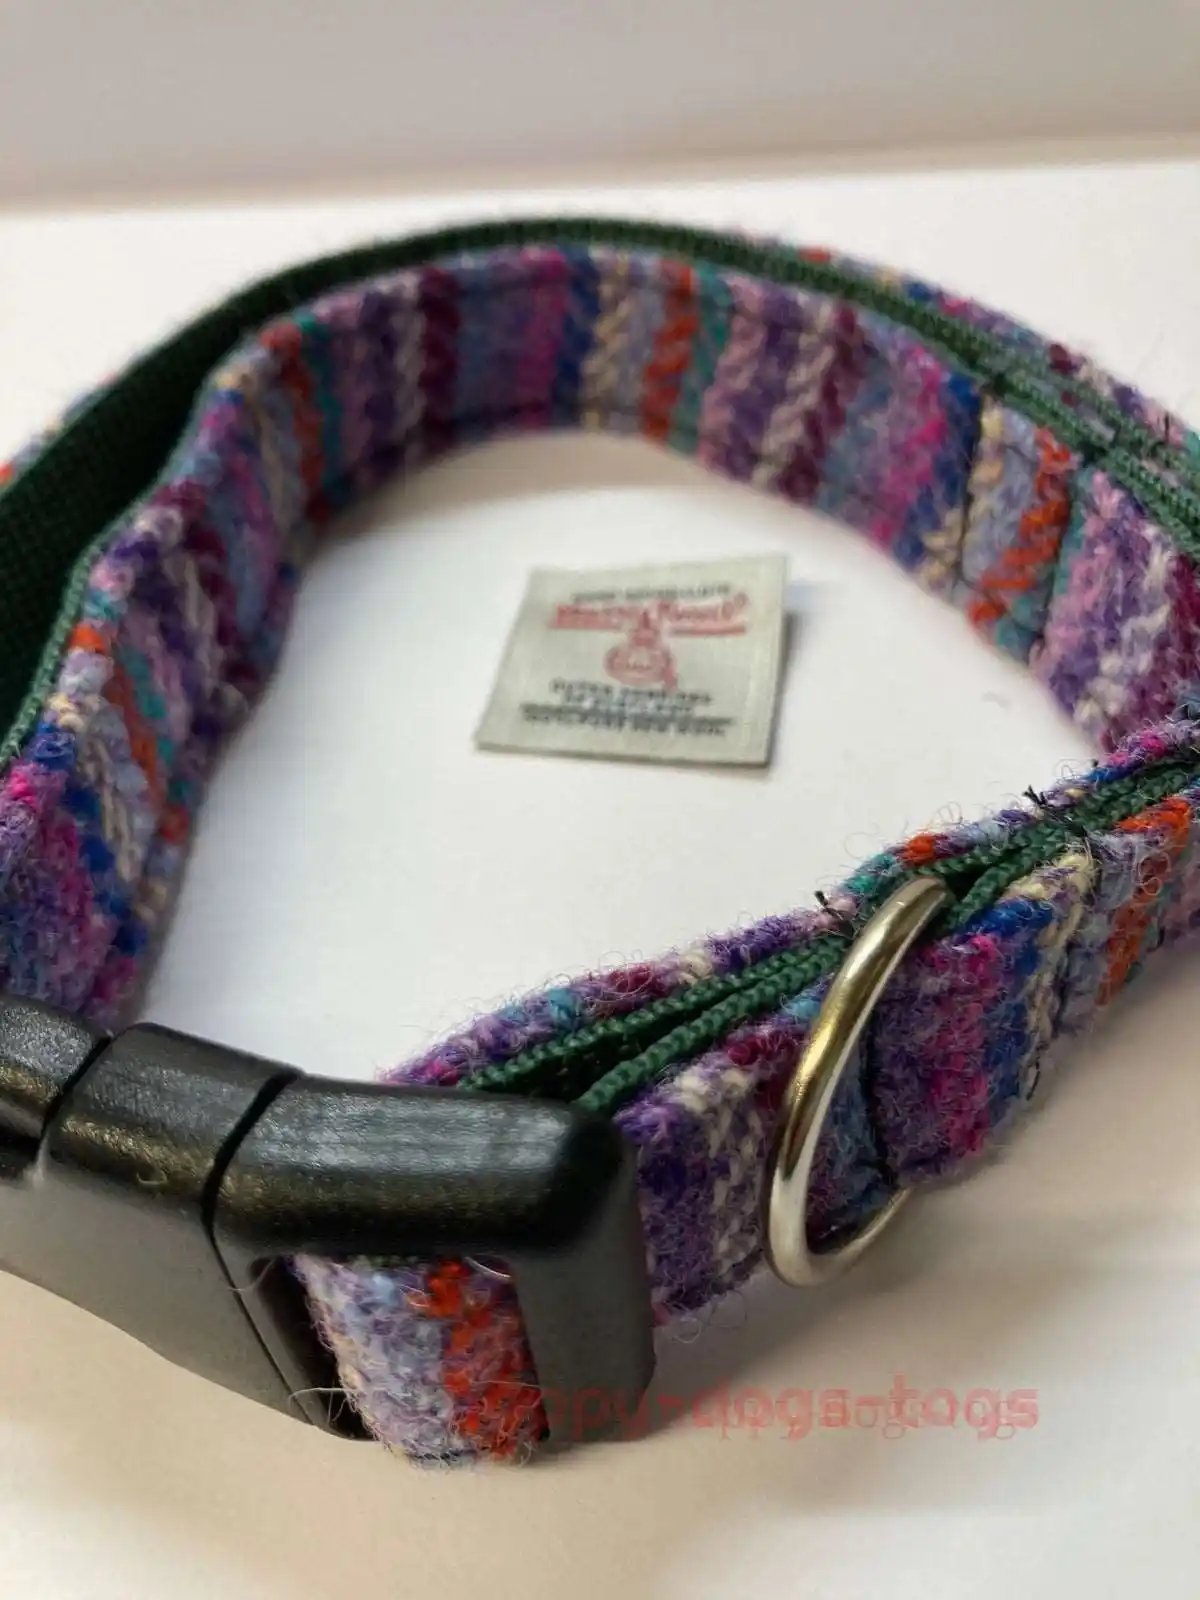 Harris Tweed Dog Collar Purple, Multi colour stripe design Front view with Harris Tweed Label